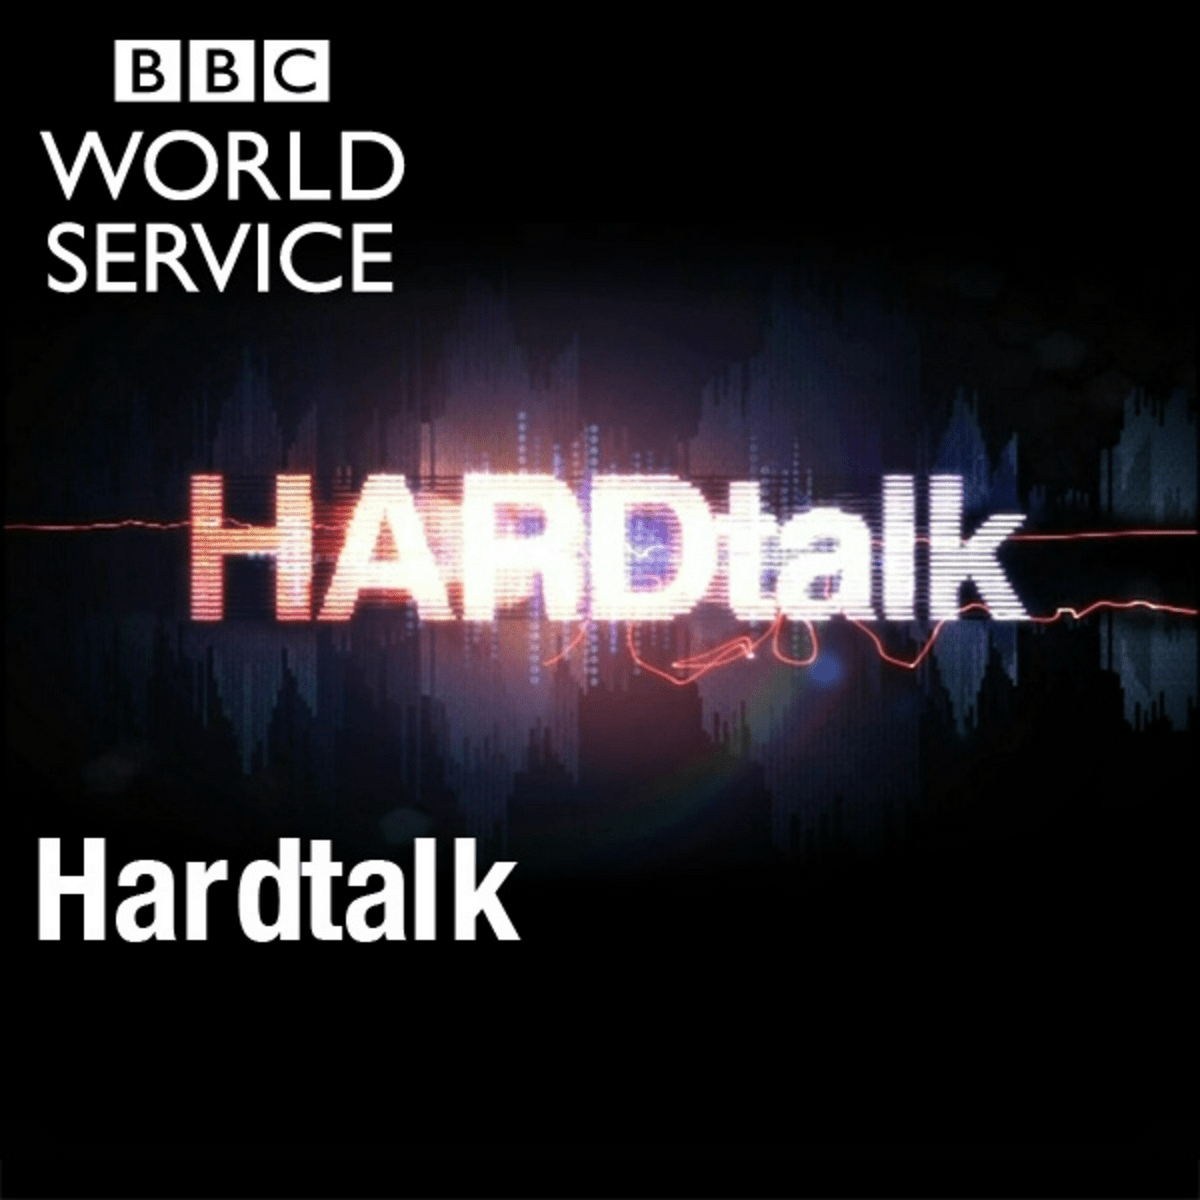 bbc hardtalk logo